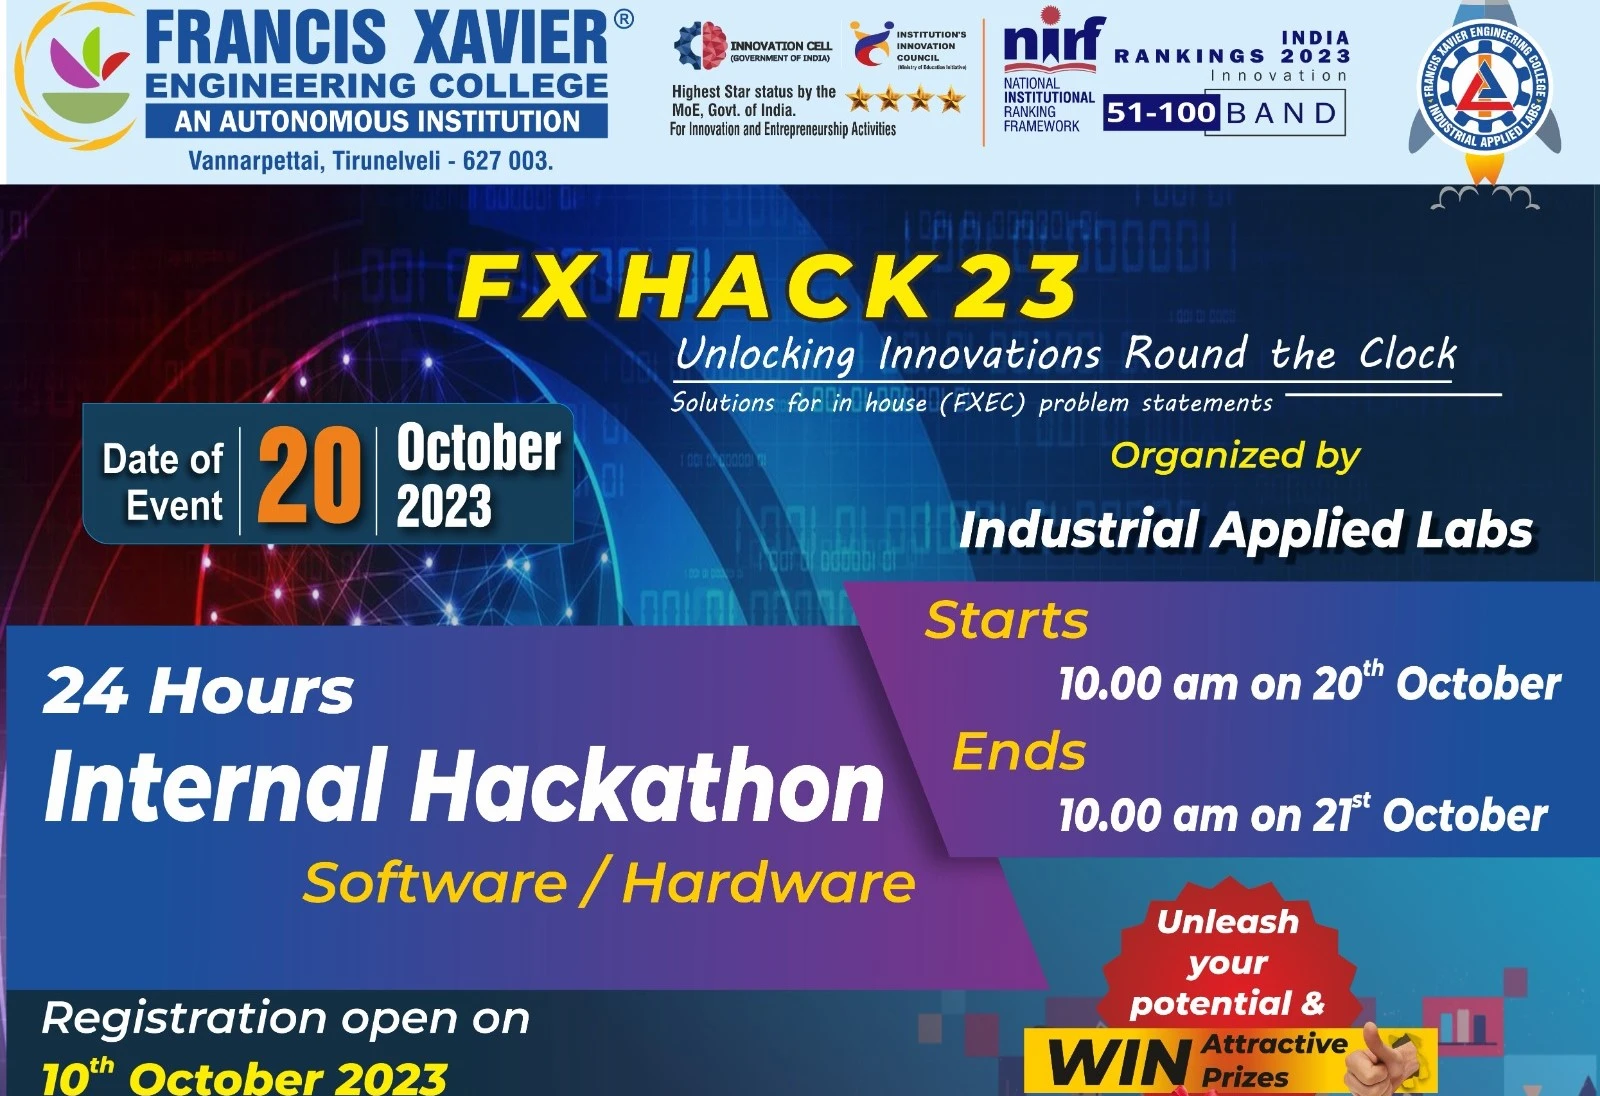 FX HACK 23: 24 hour Internal Hackathon 